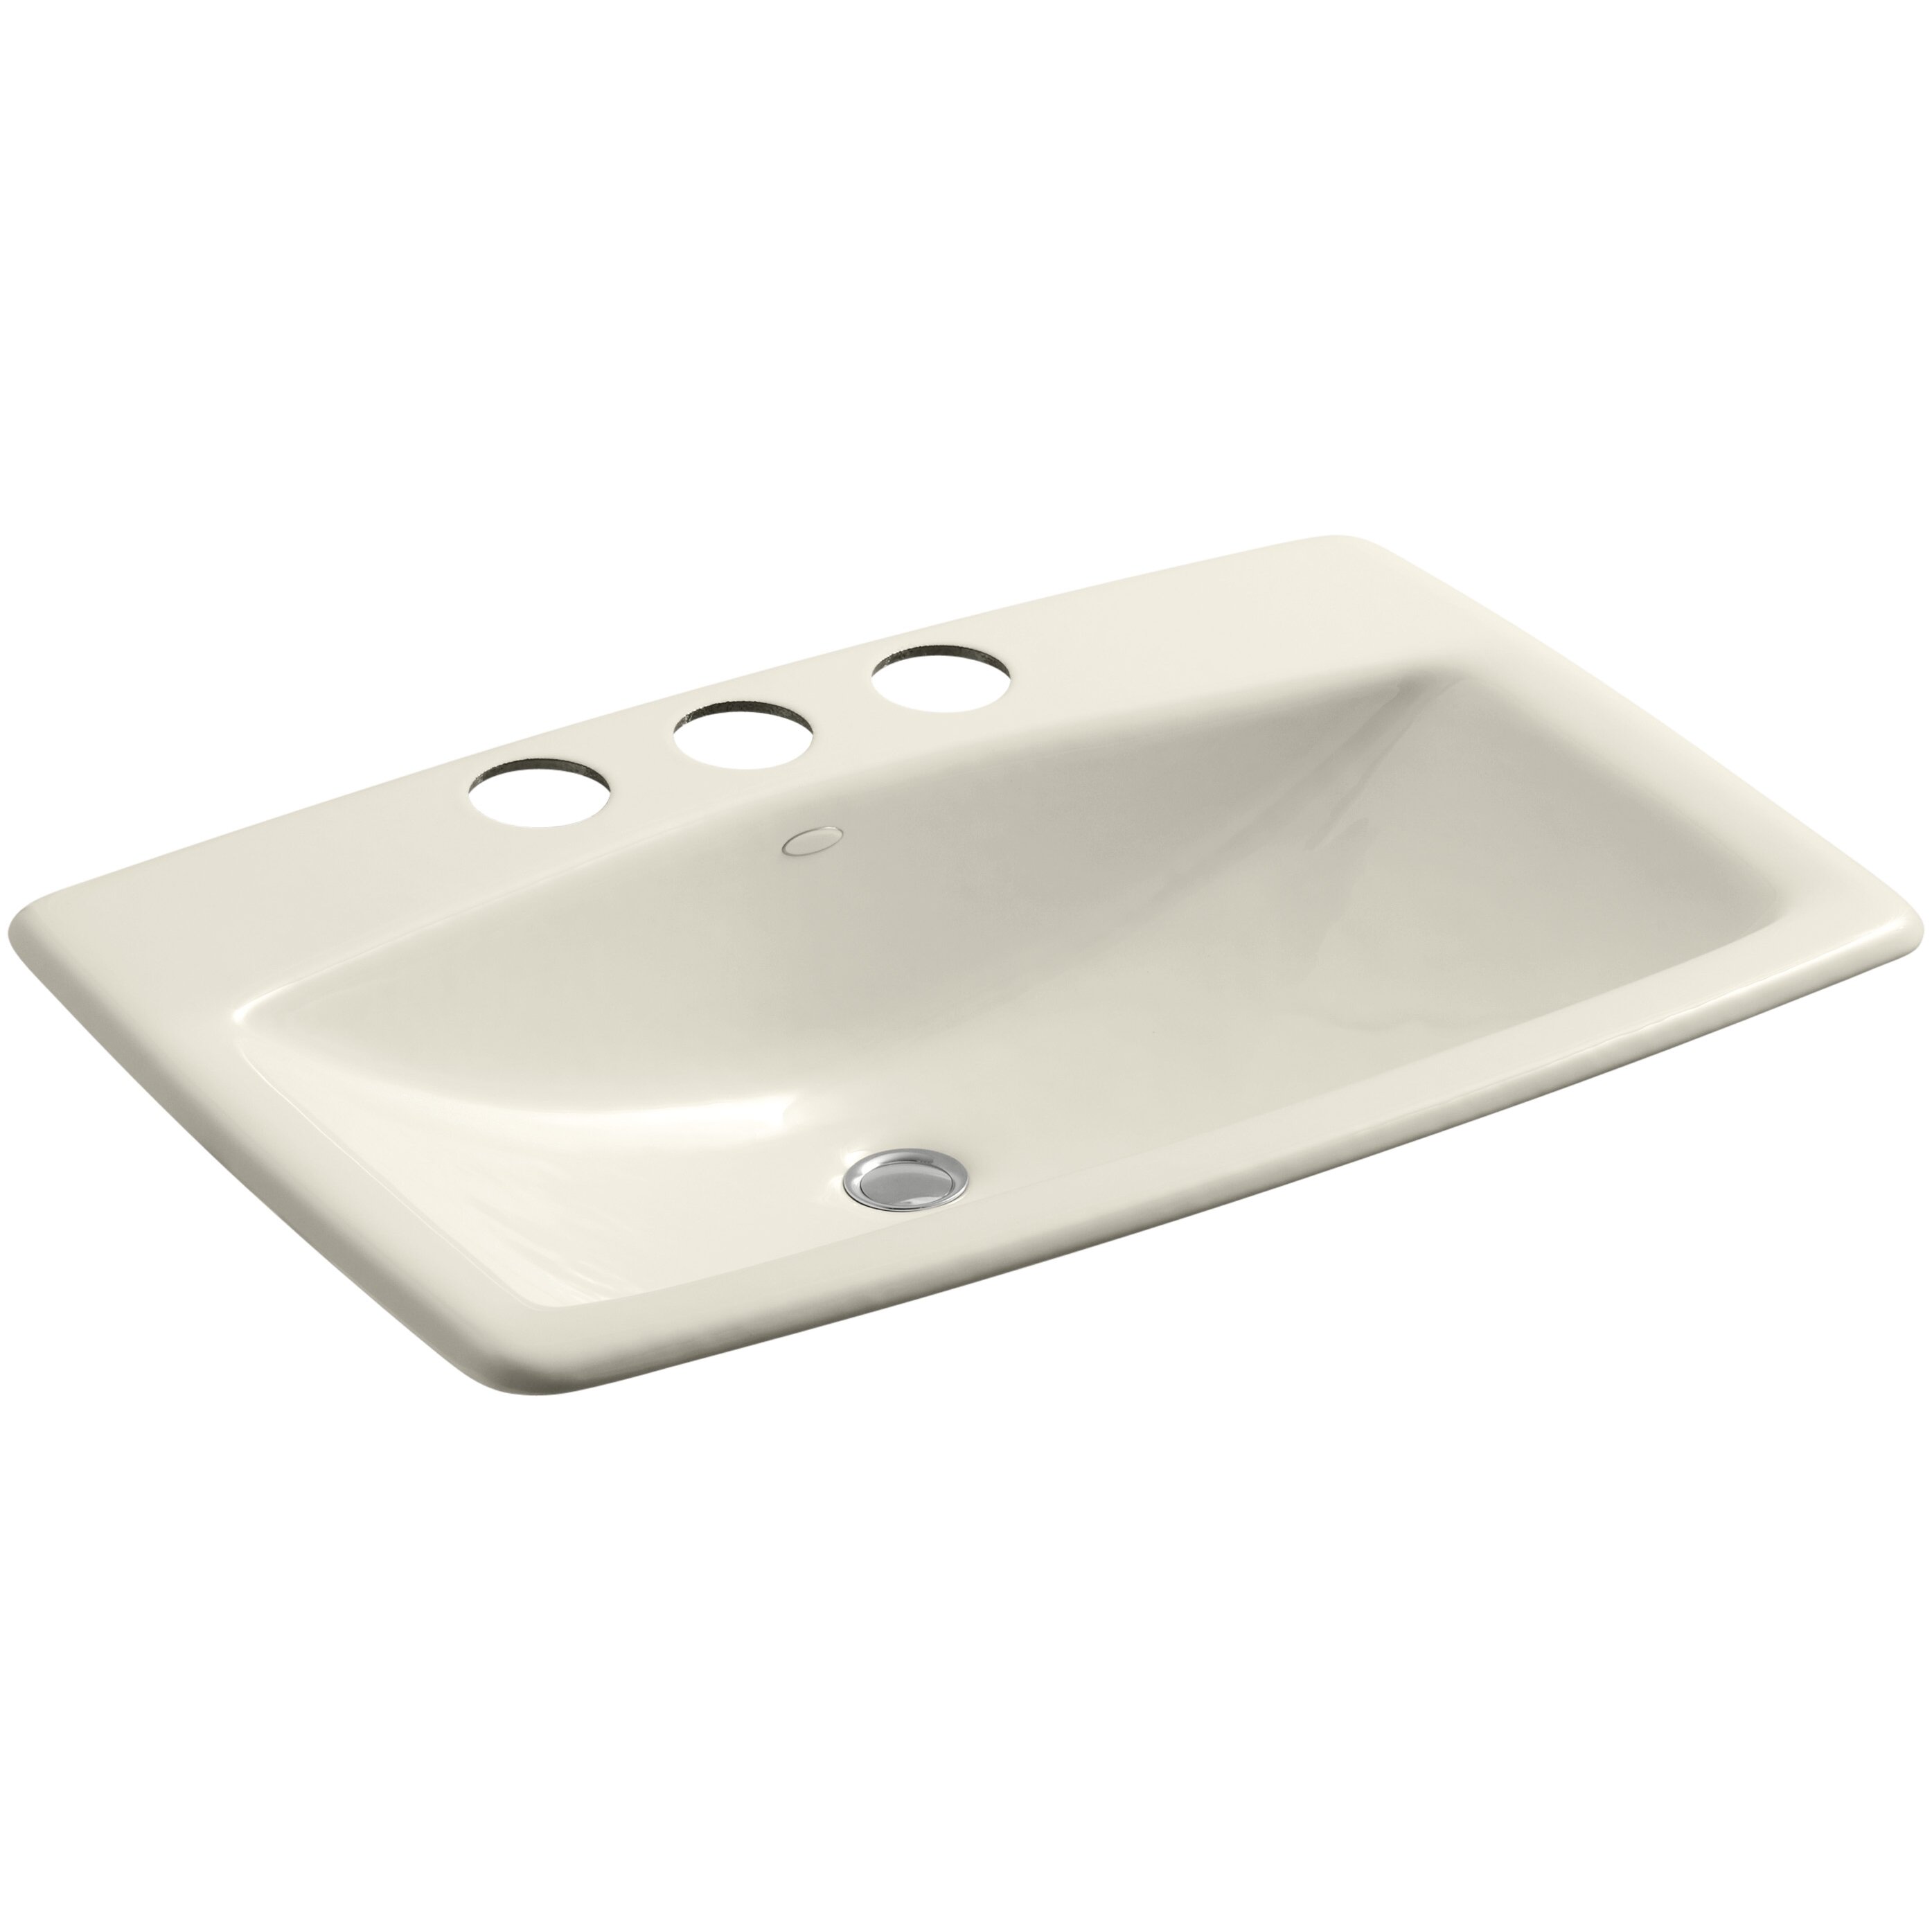 Kohler Man'S Lav Undermount Bathroom Sink & Reviews | Wayfair